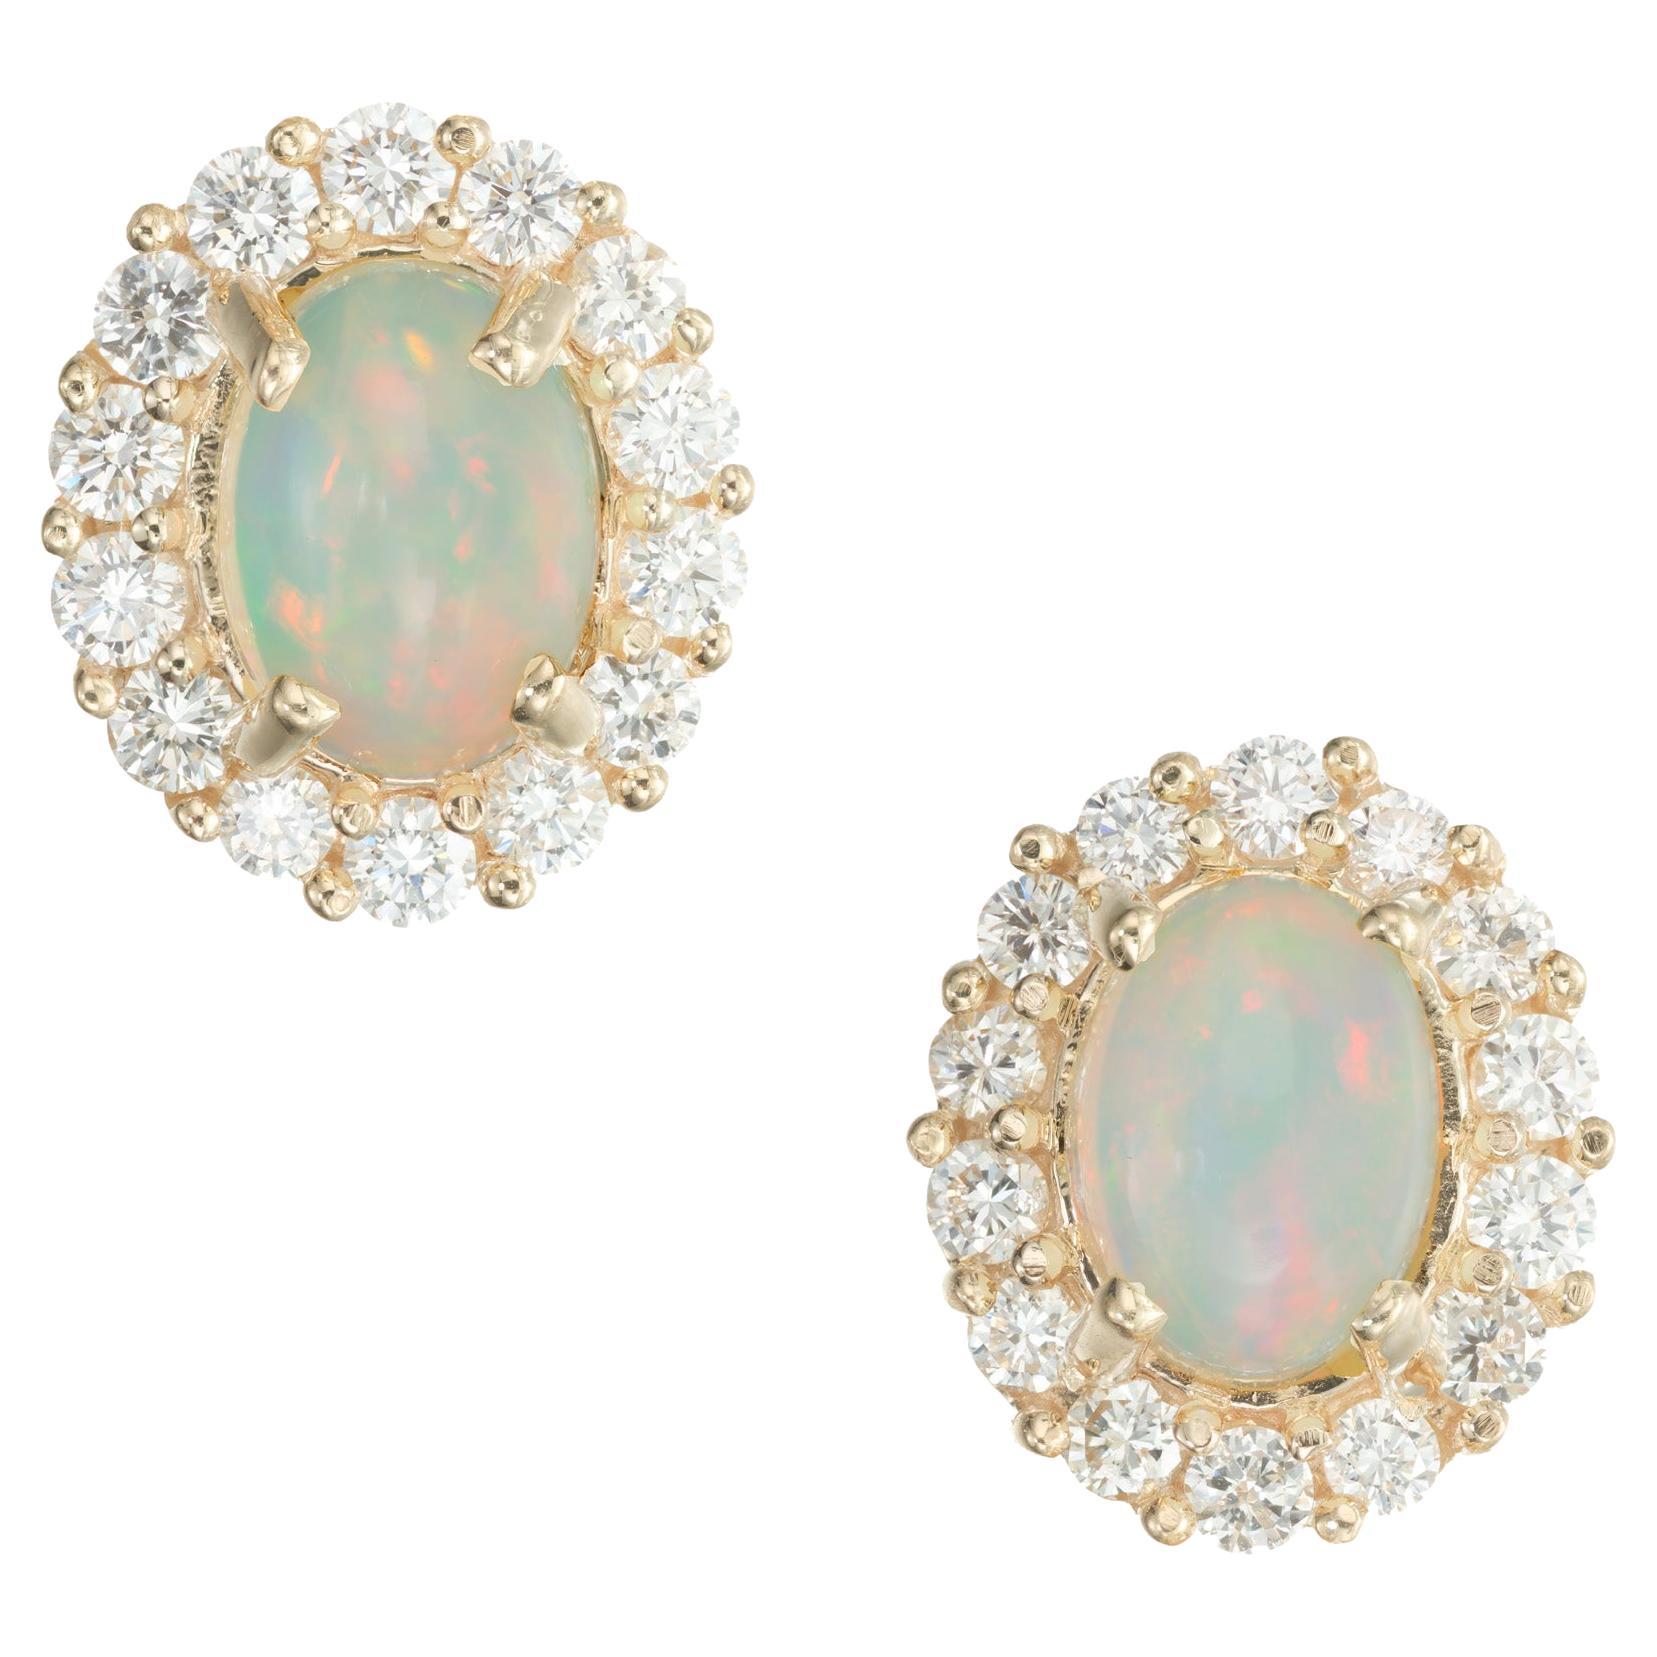 Peter Suchy 1.91 Carat Opal Diamond Halo Yellow Gold Earrings